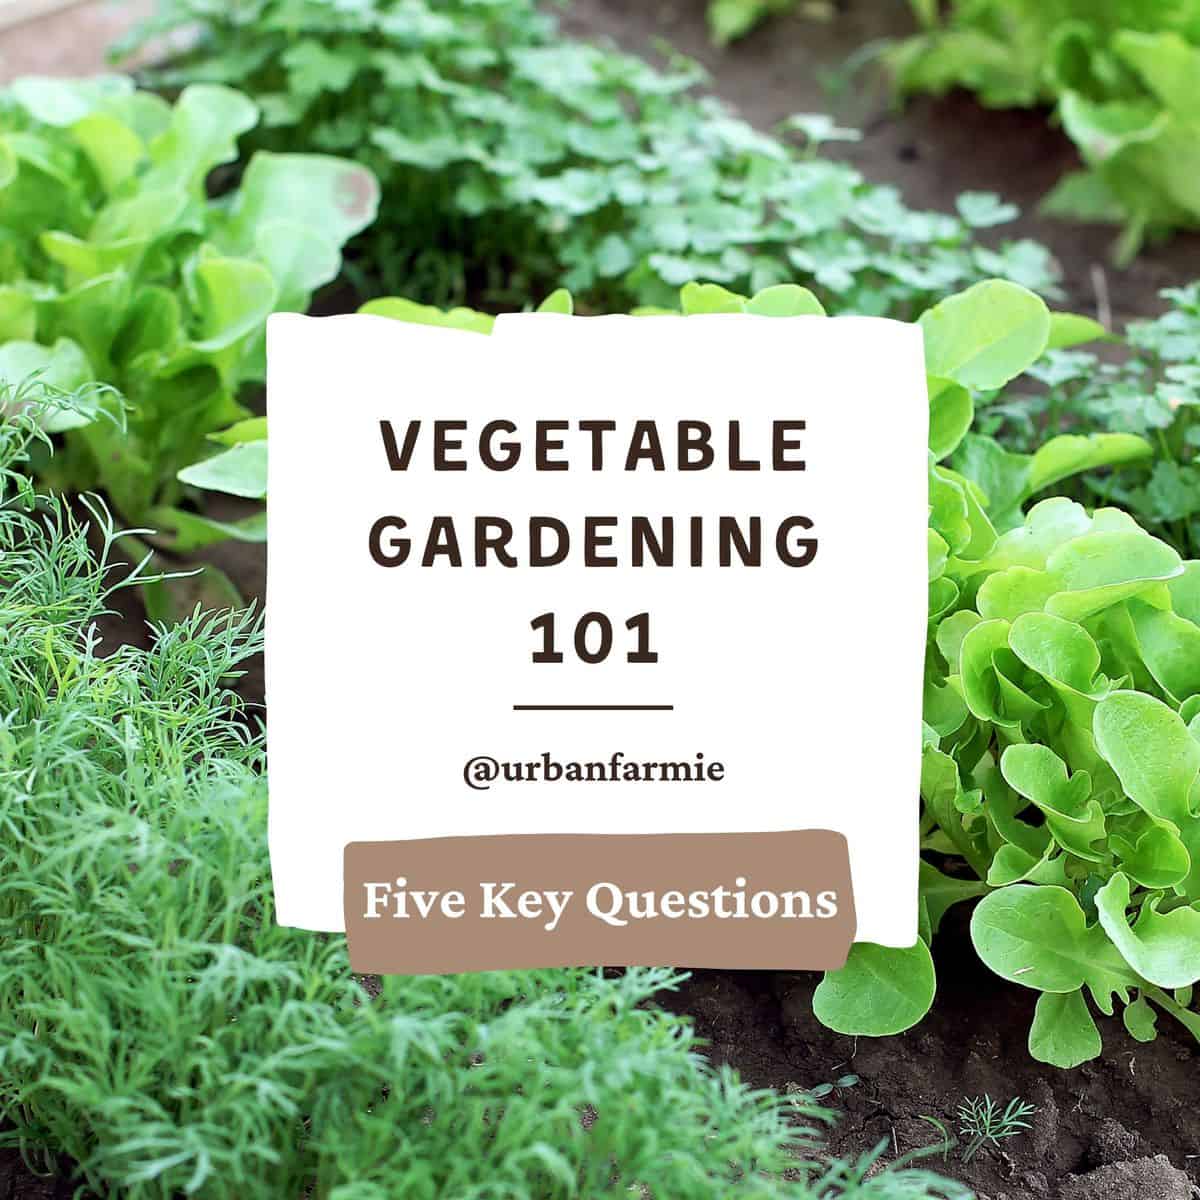 https://urbanfarmie.com/wp-content/uploads/Vegetable-Gardening-101-Featured-Image.jpg